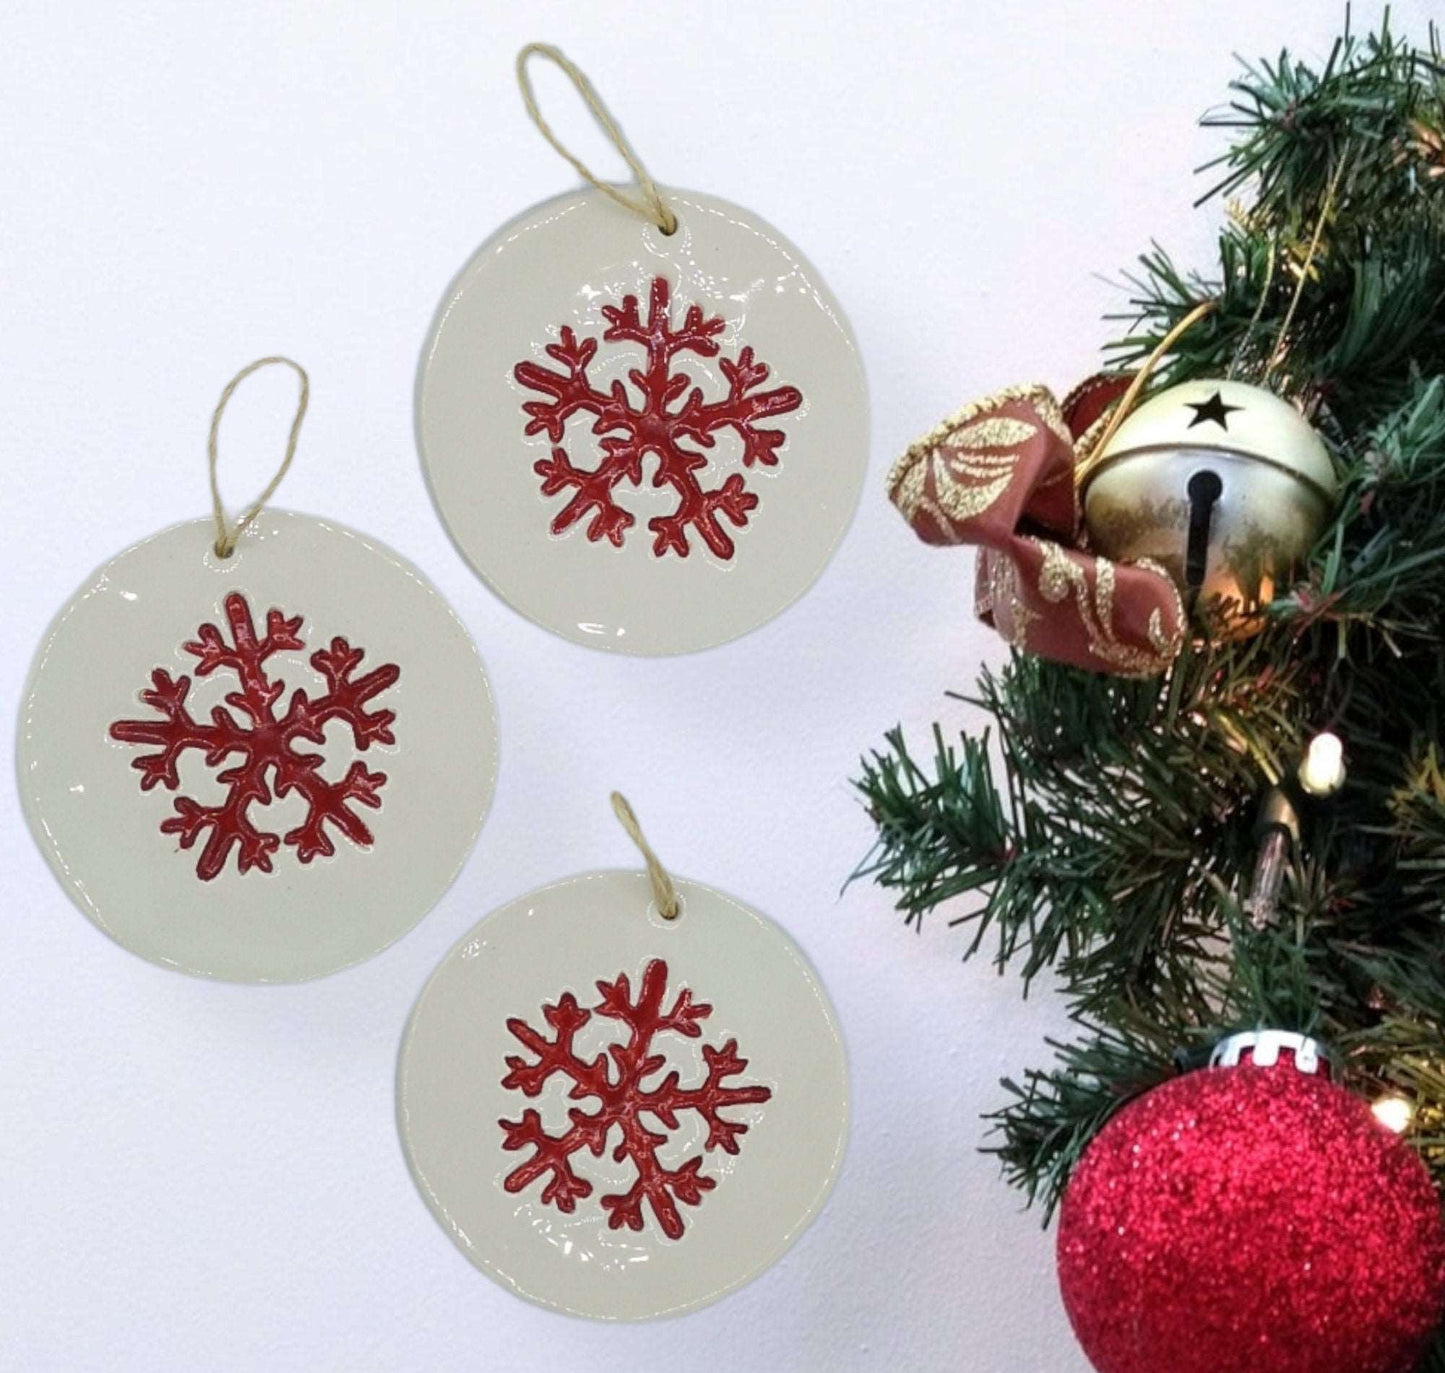 1Pc Red Snowflake Ornament, Handmade Ceramic Wall Hanging Nordic Winter Decor, Chrismas Tree Ornament